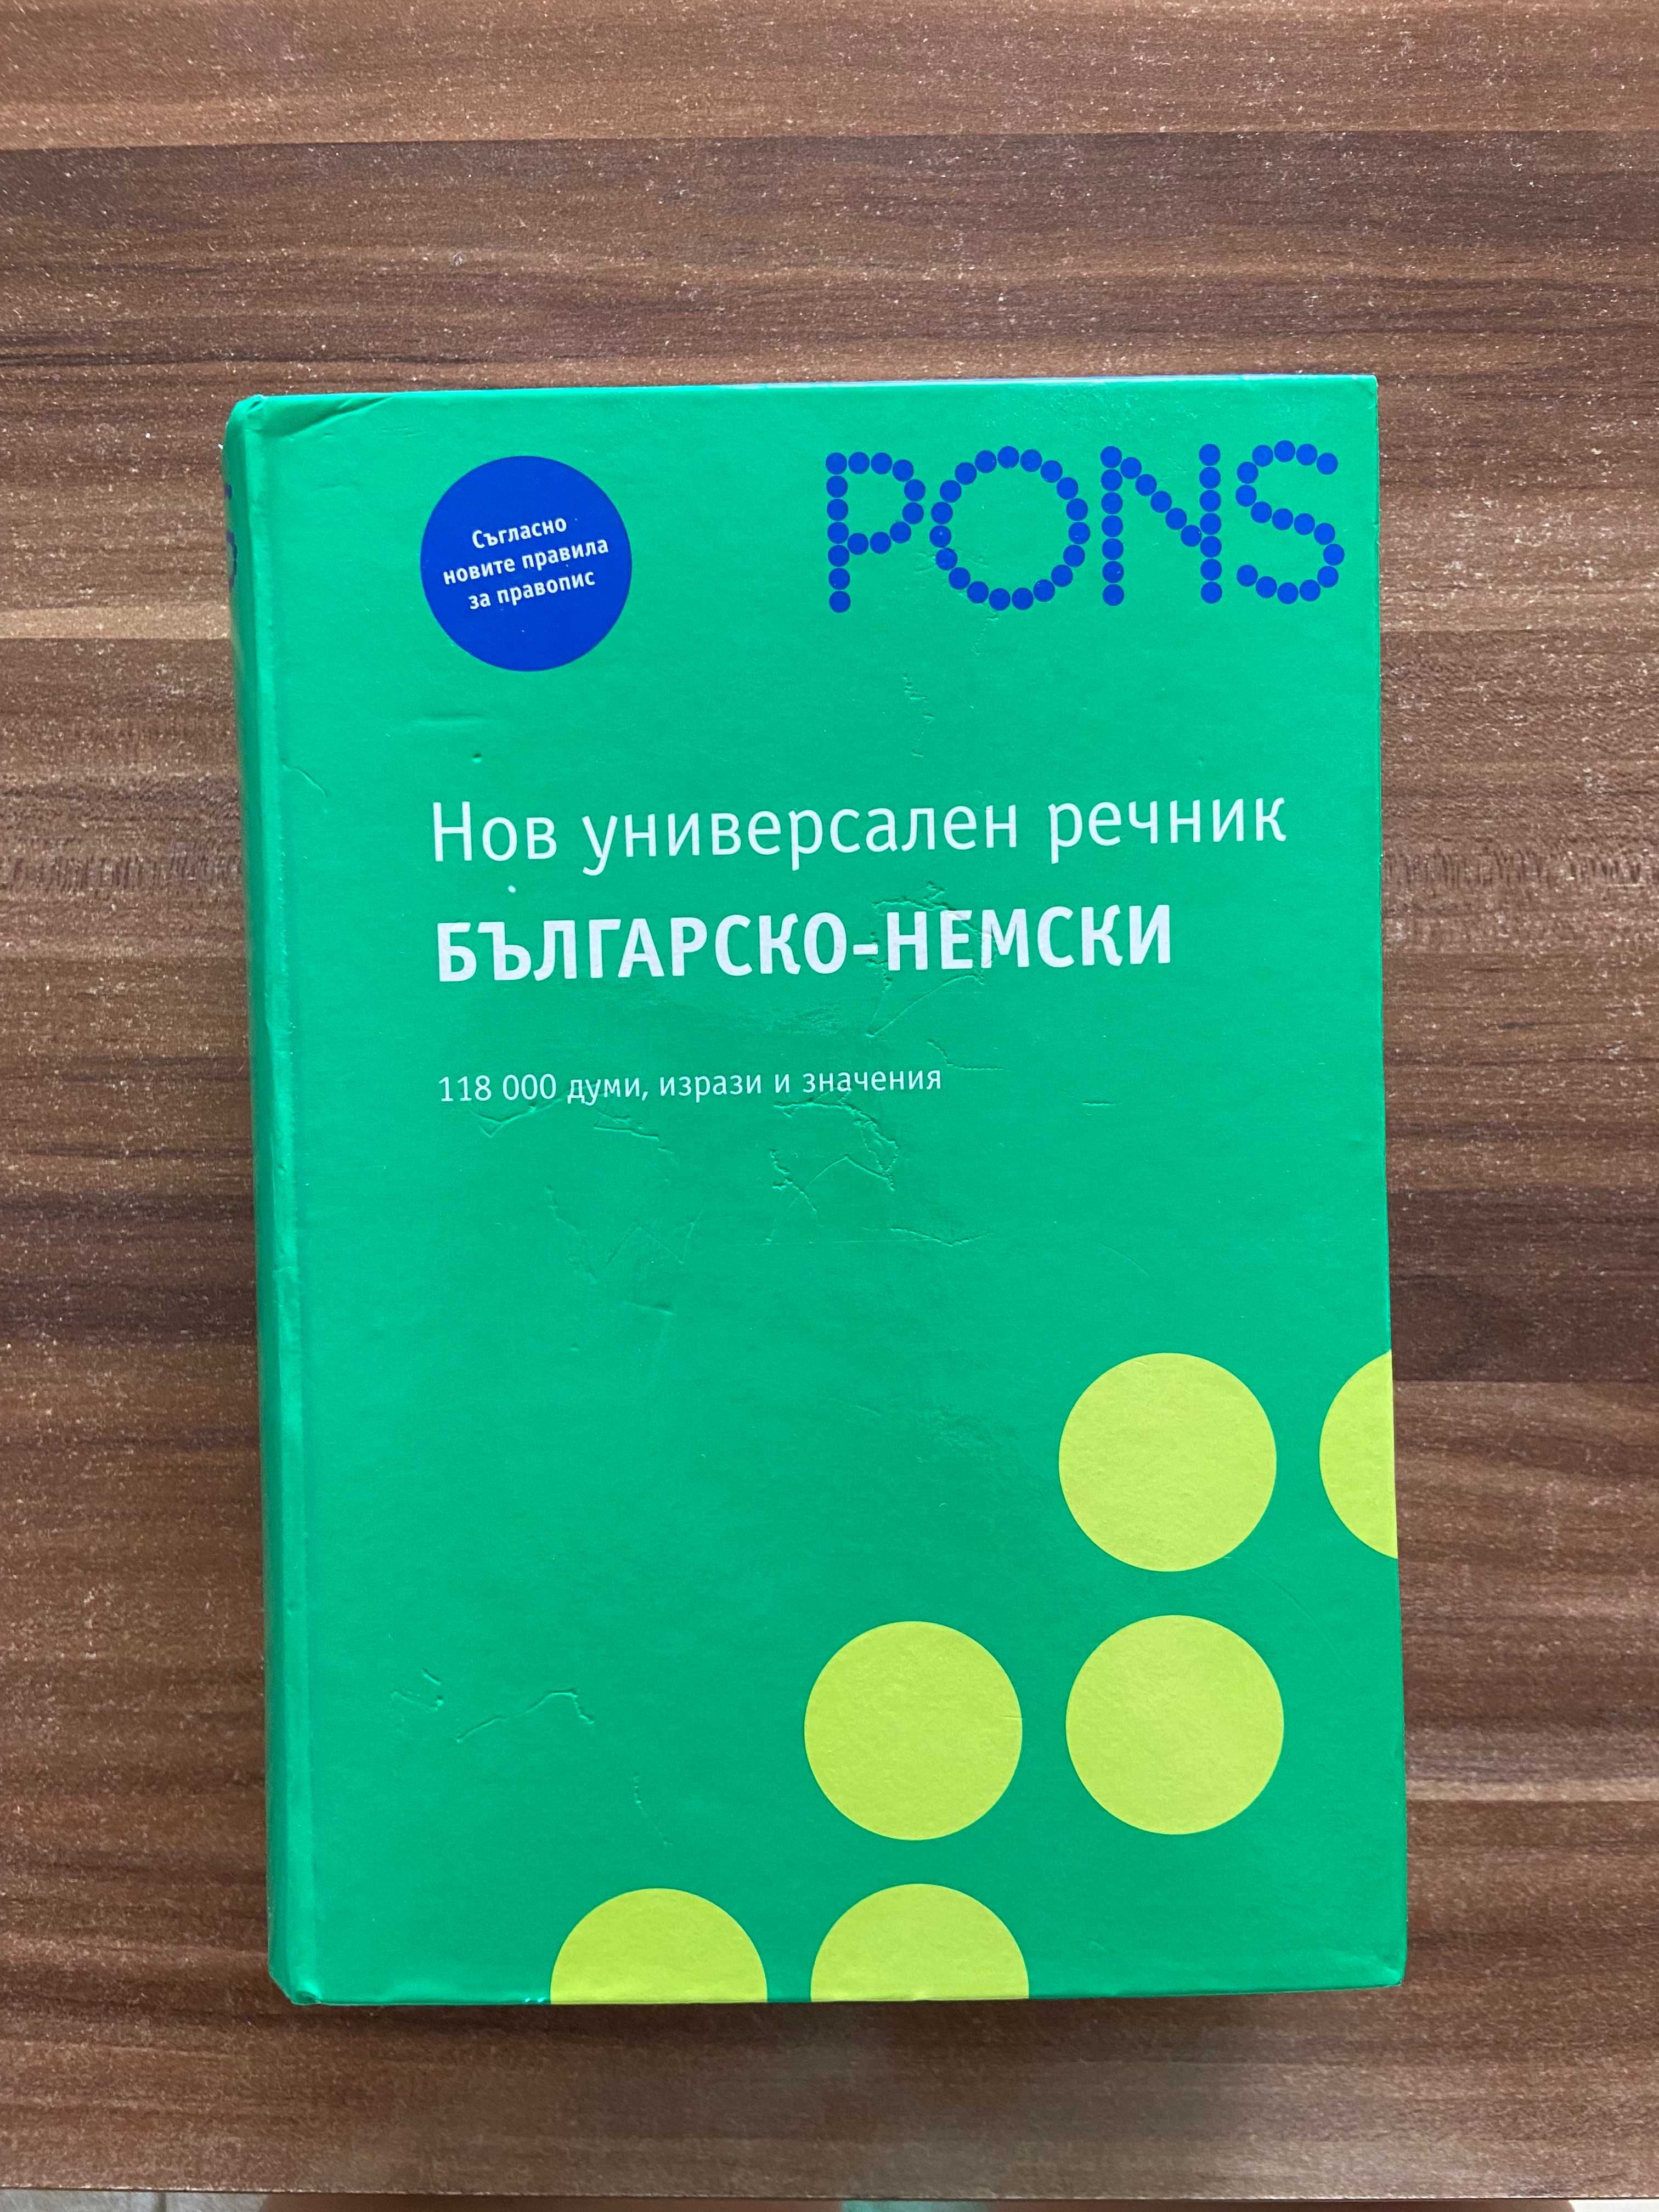 Българско-немски и речник на PONS